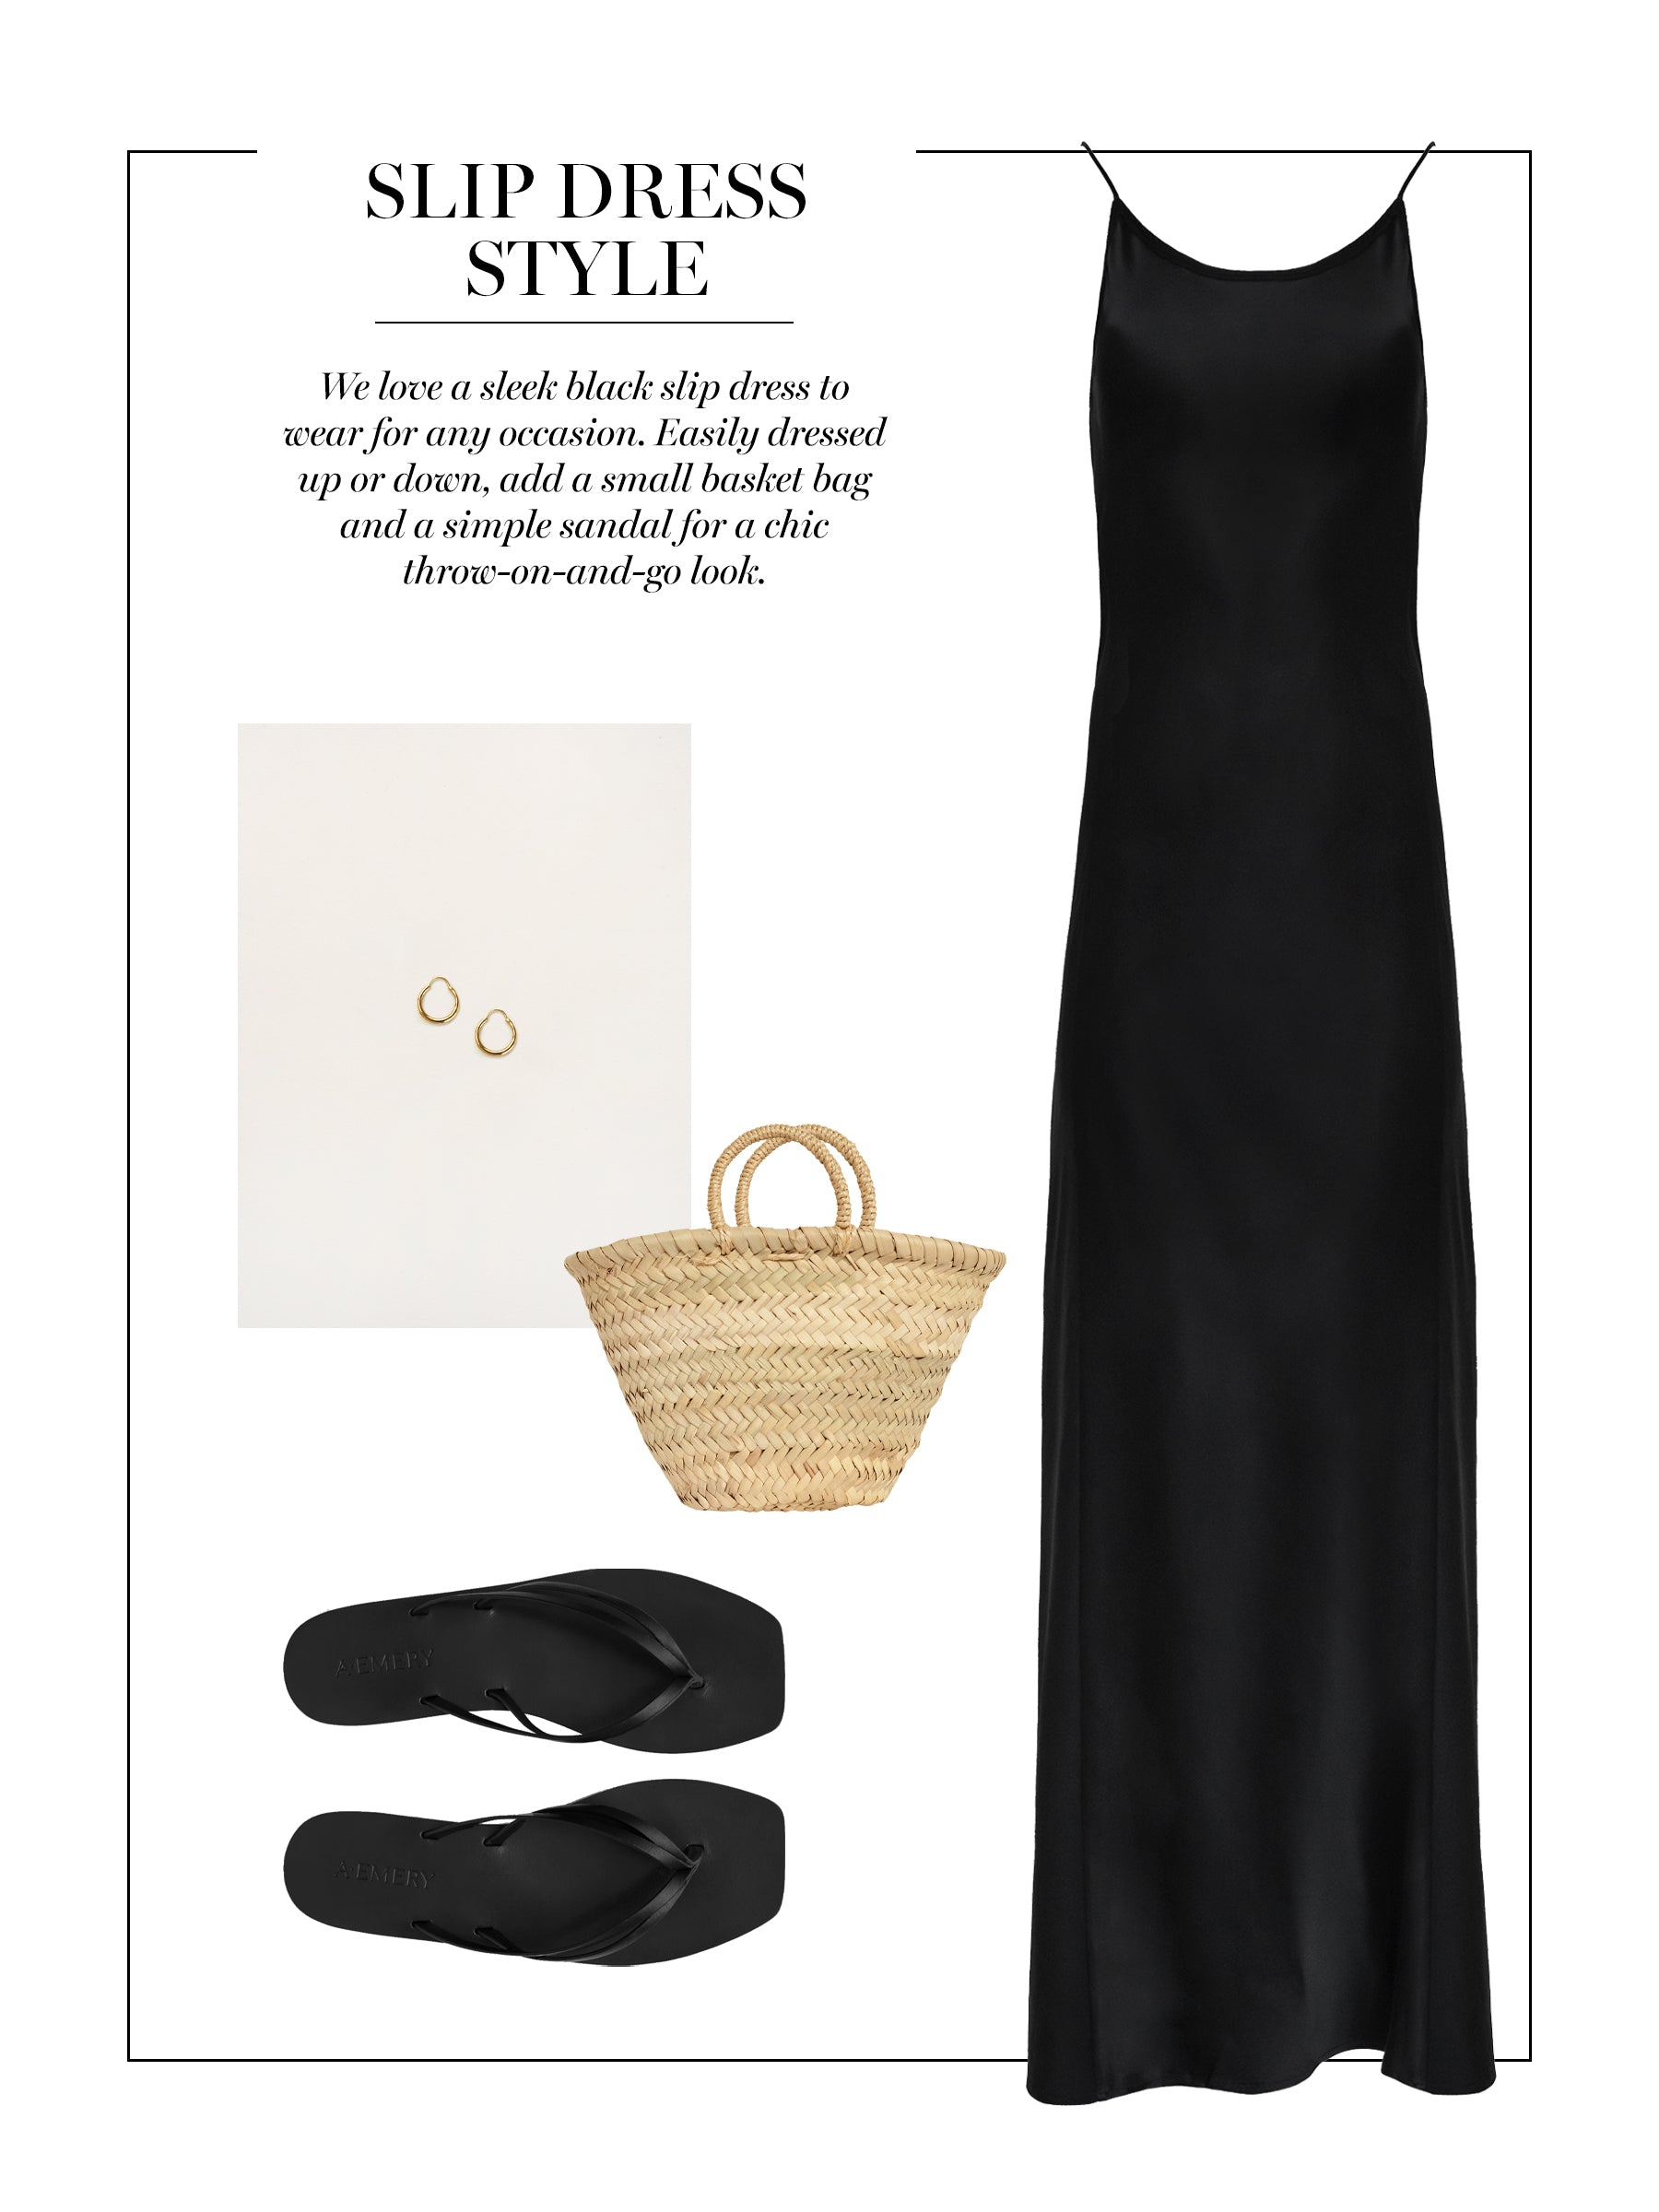 A classic black slip dress